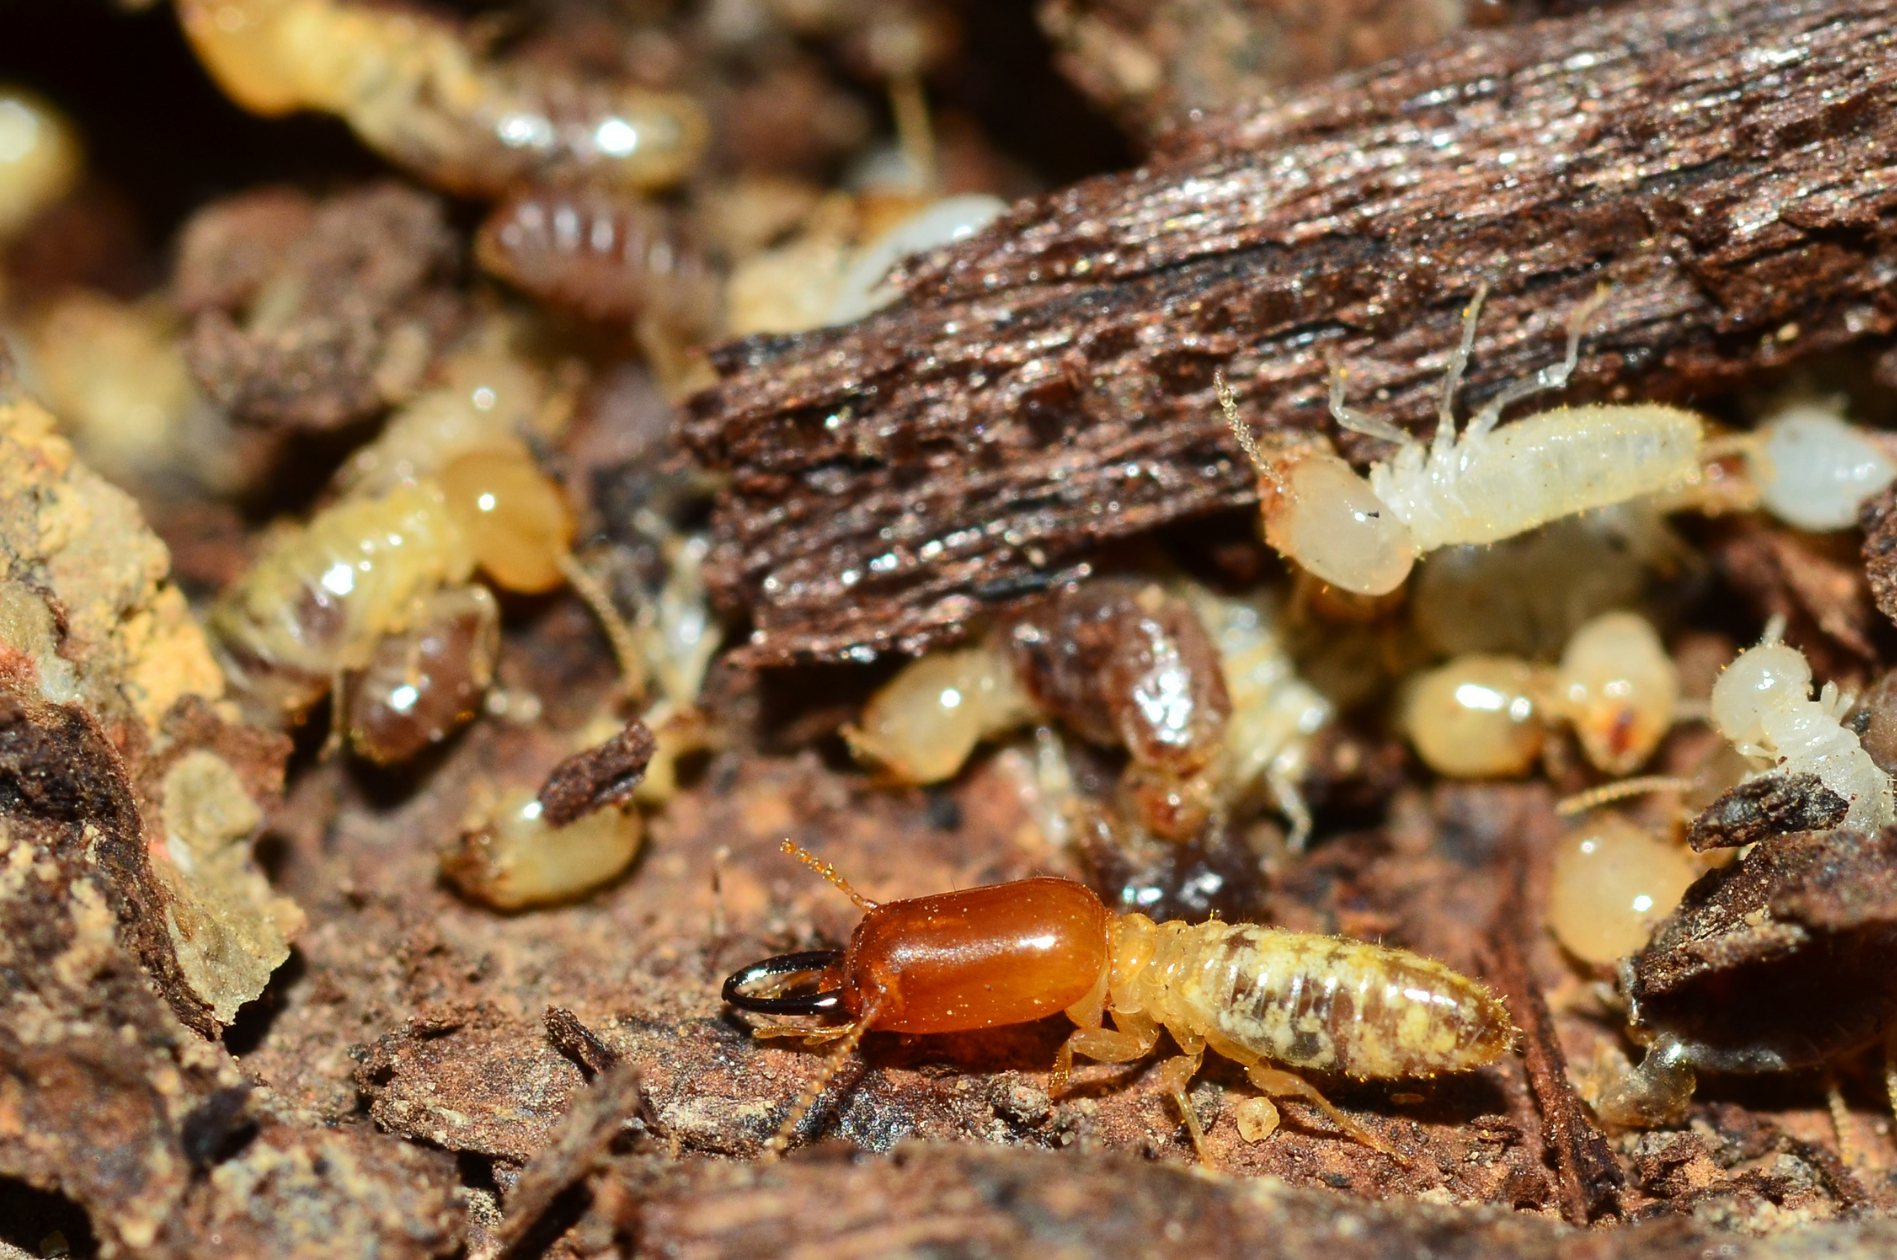 Termites are common winter pests that are destructive